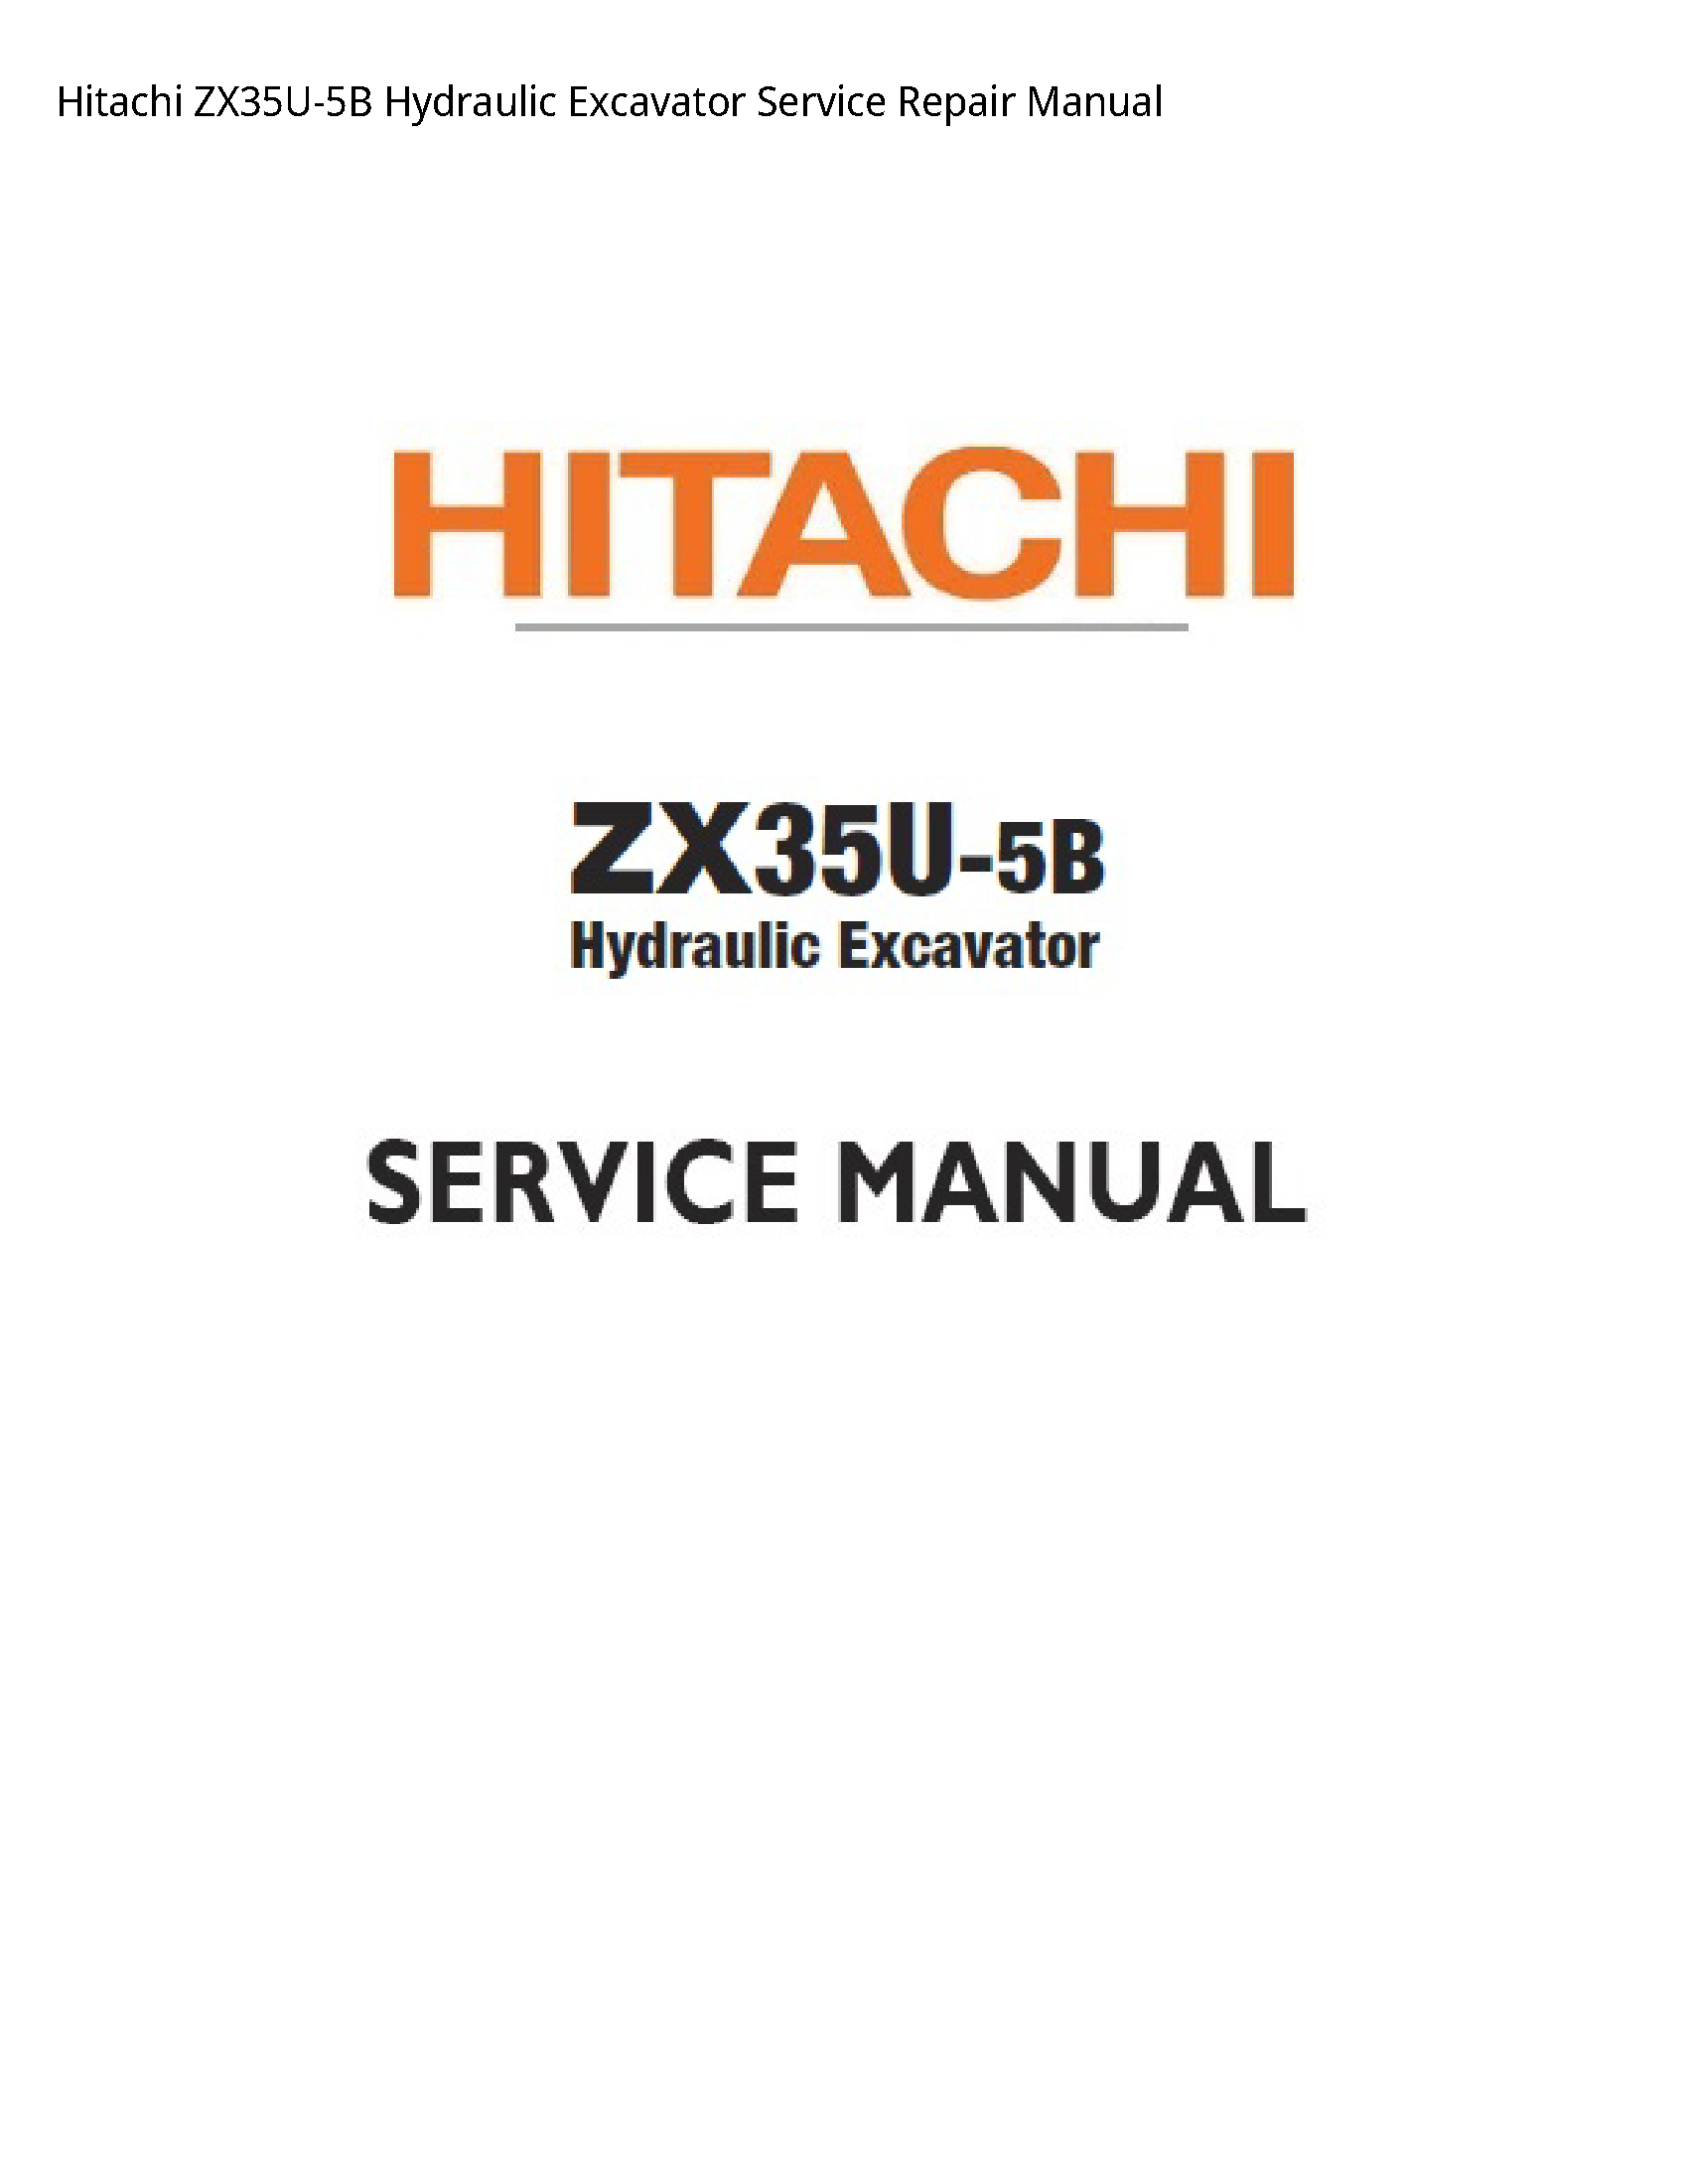 Hitachi ZX35U-5B Hydraulic Excavator manual